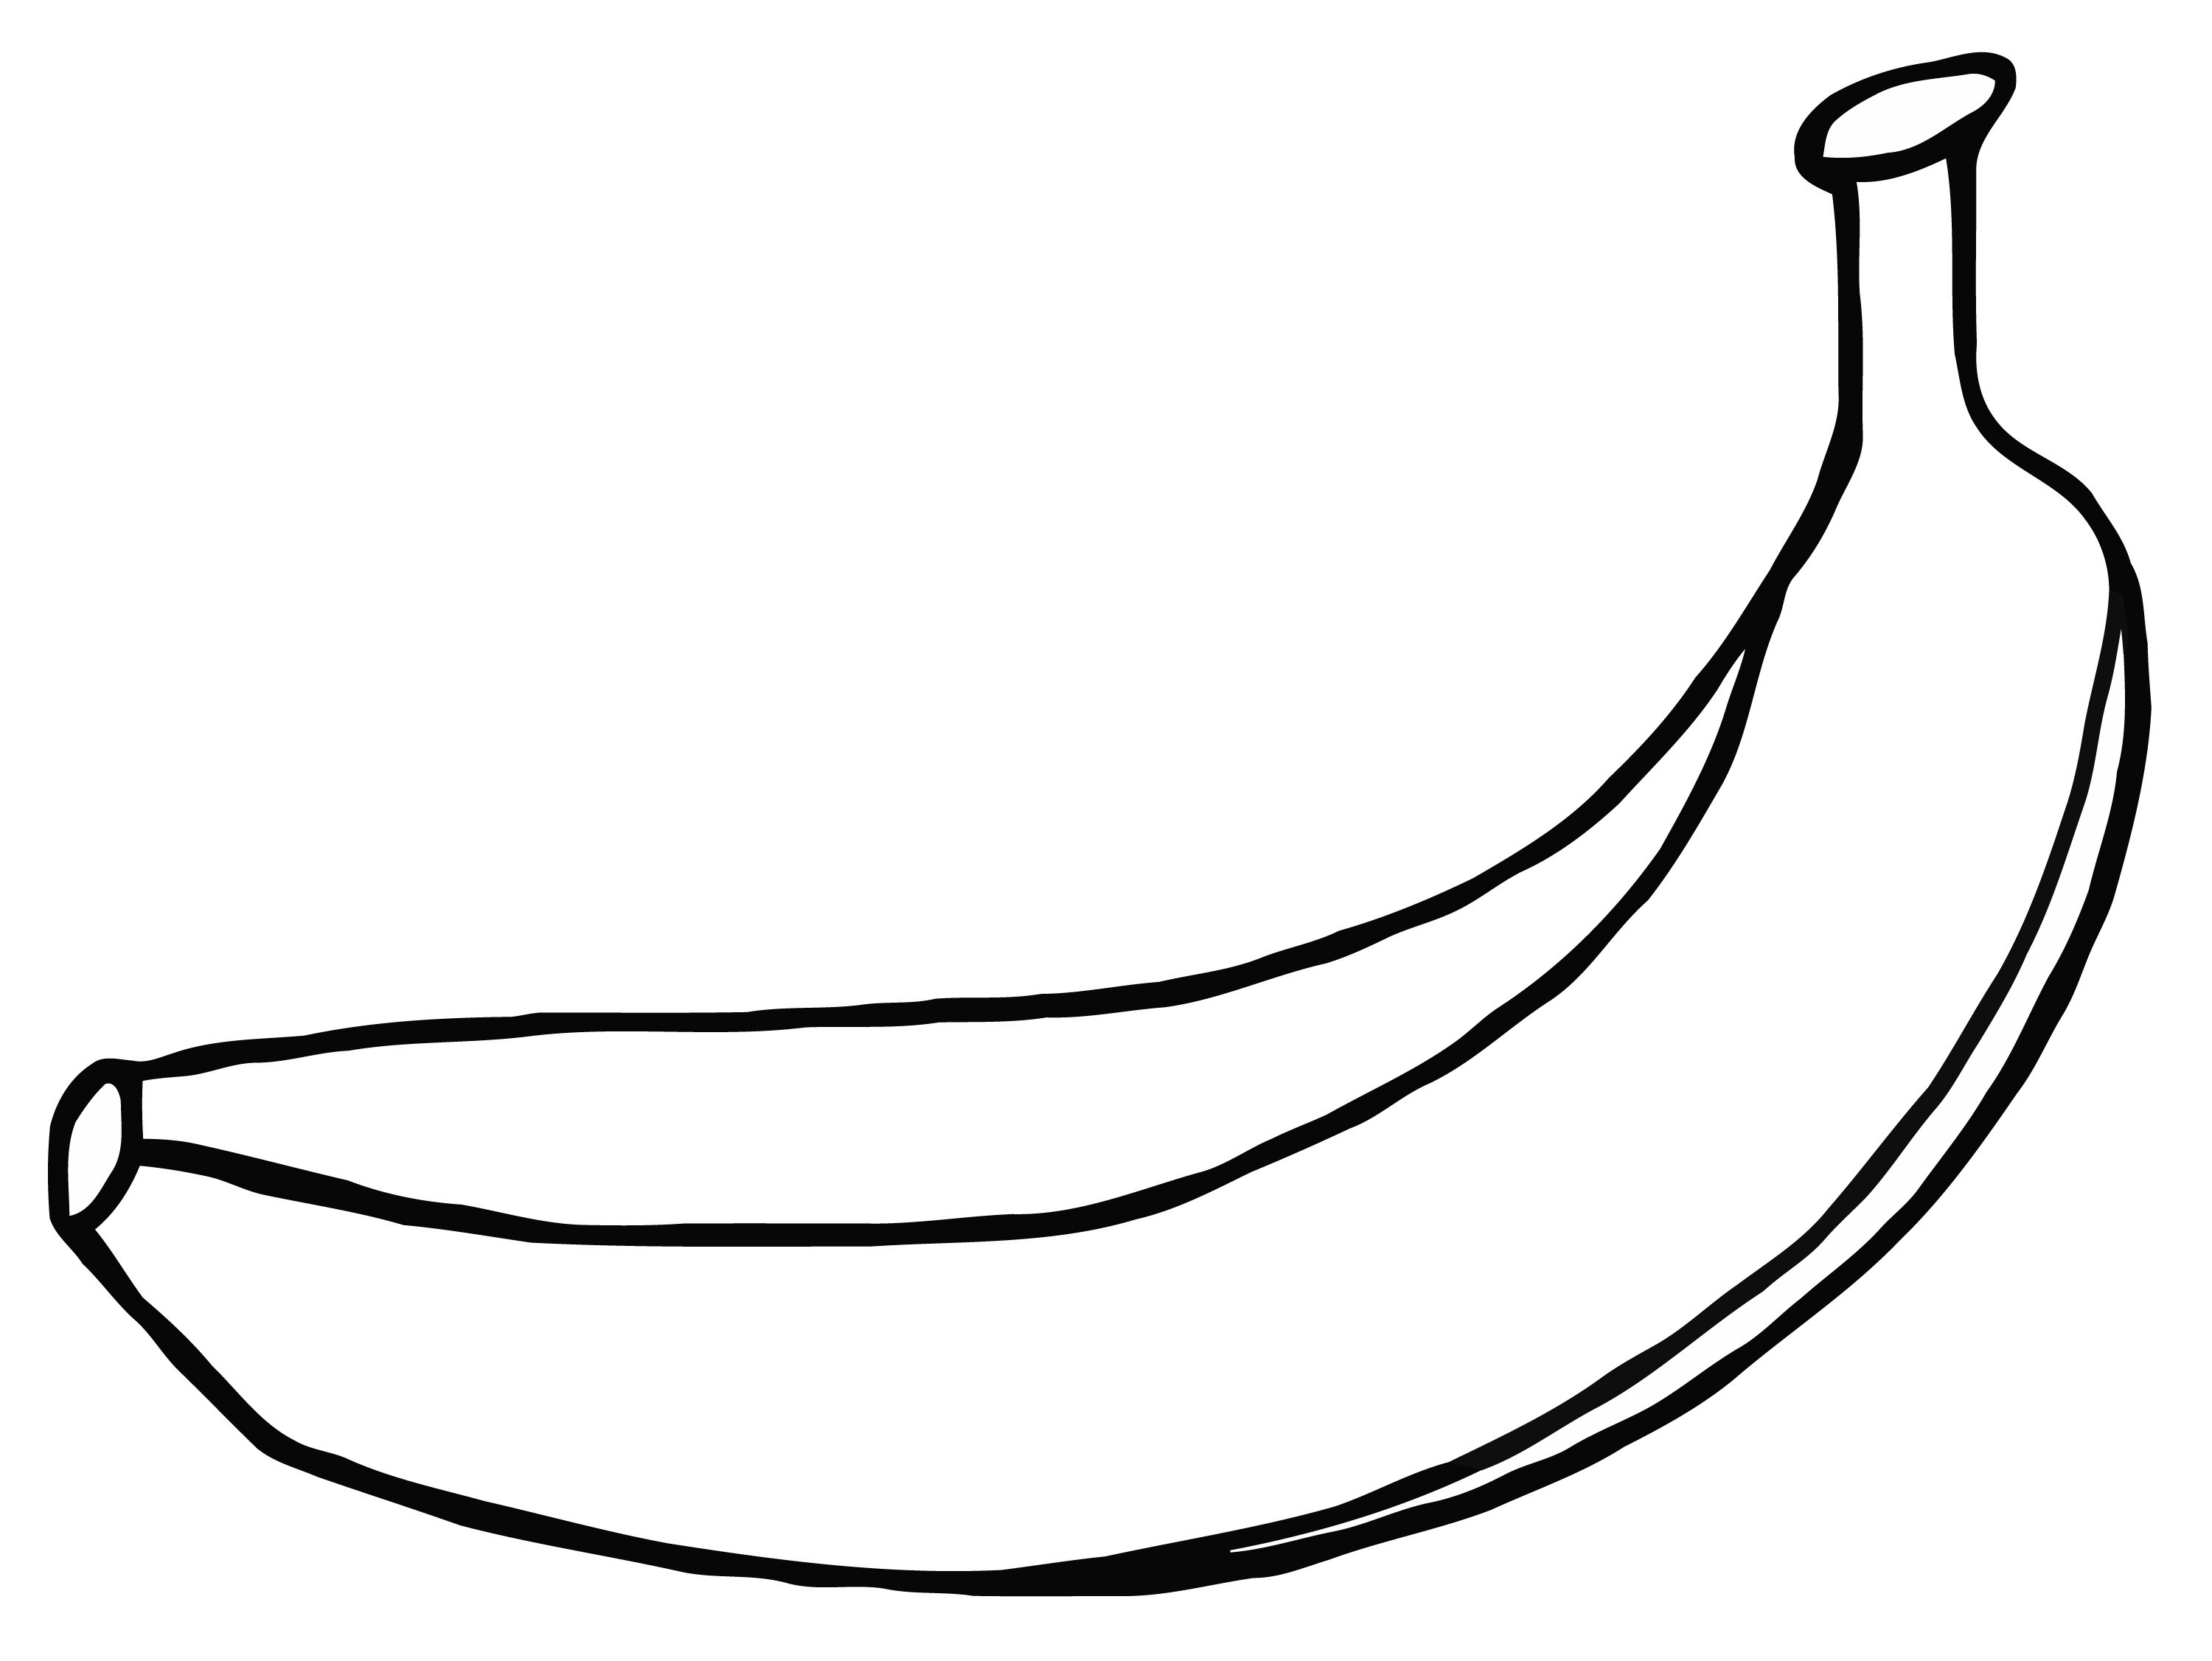 Banana Outline Clipart 